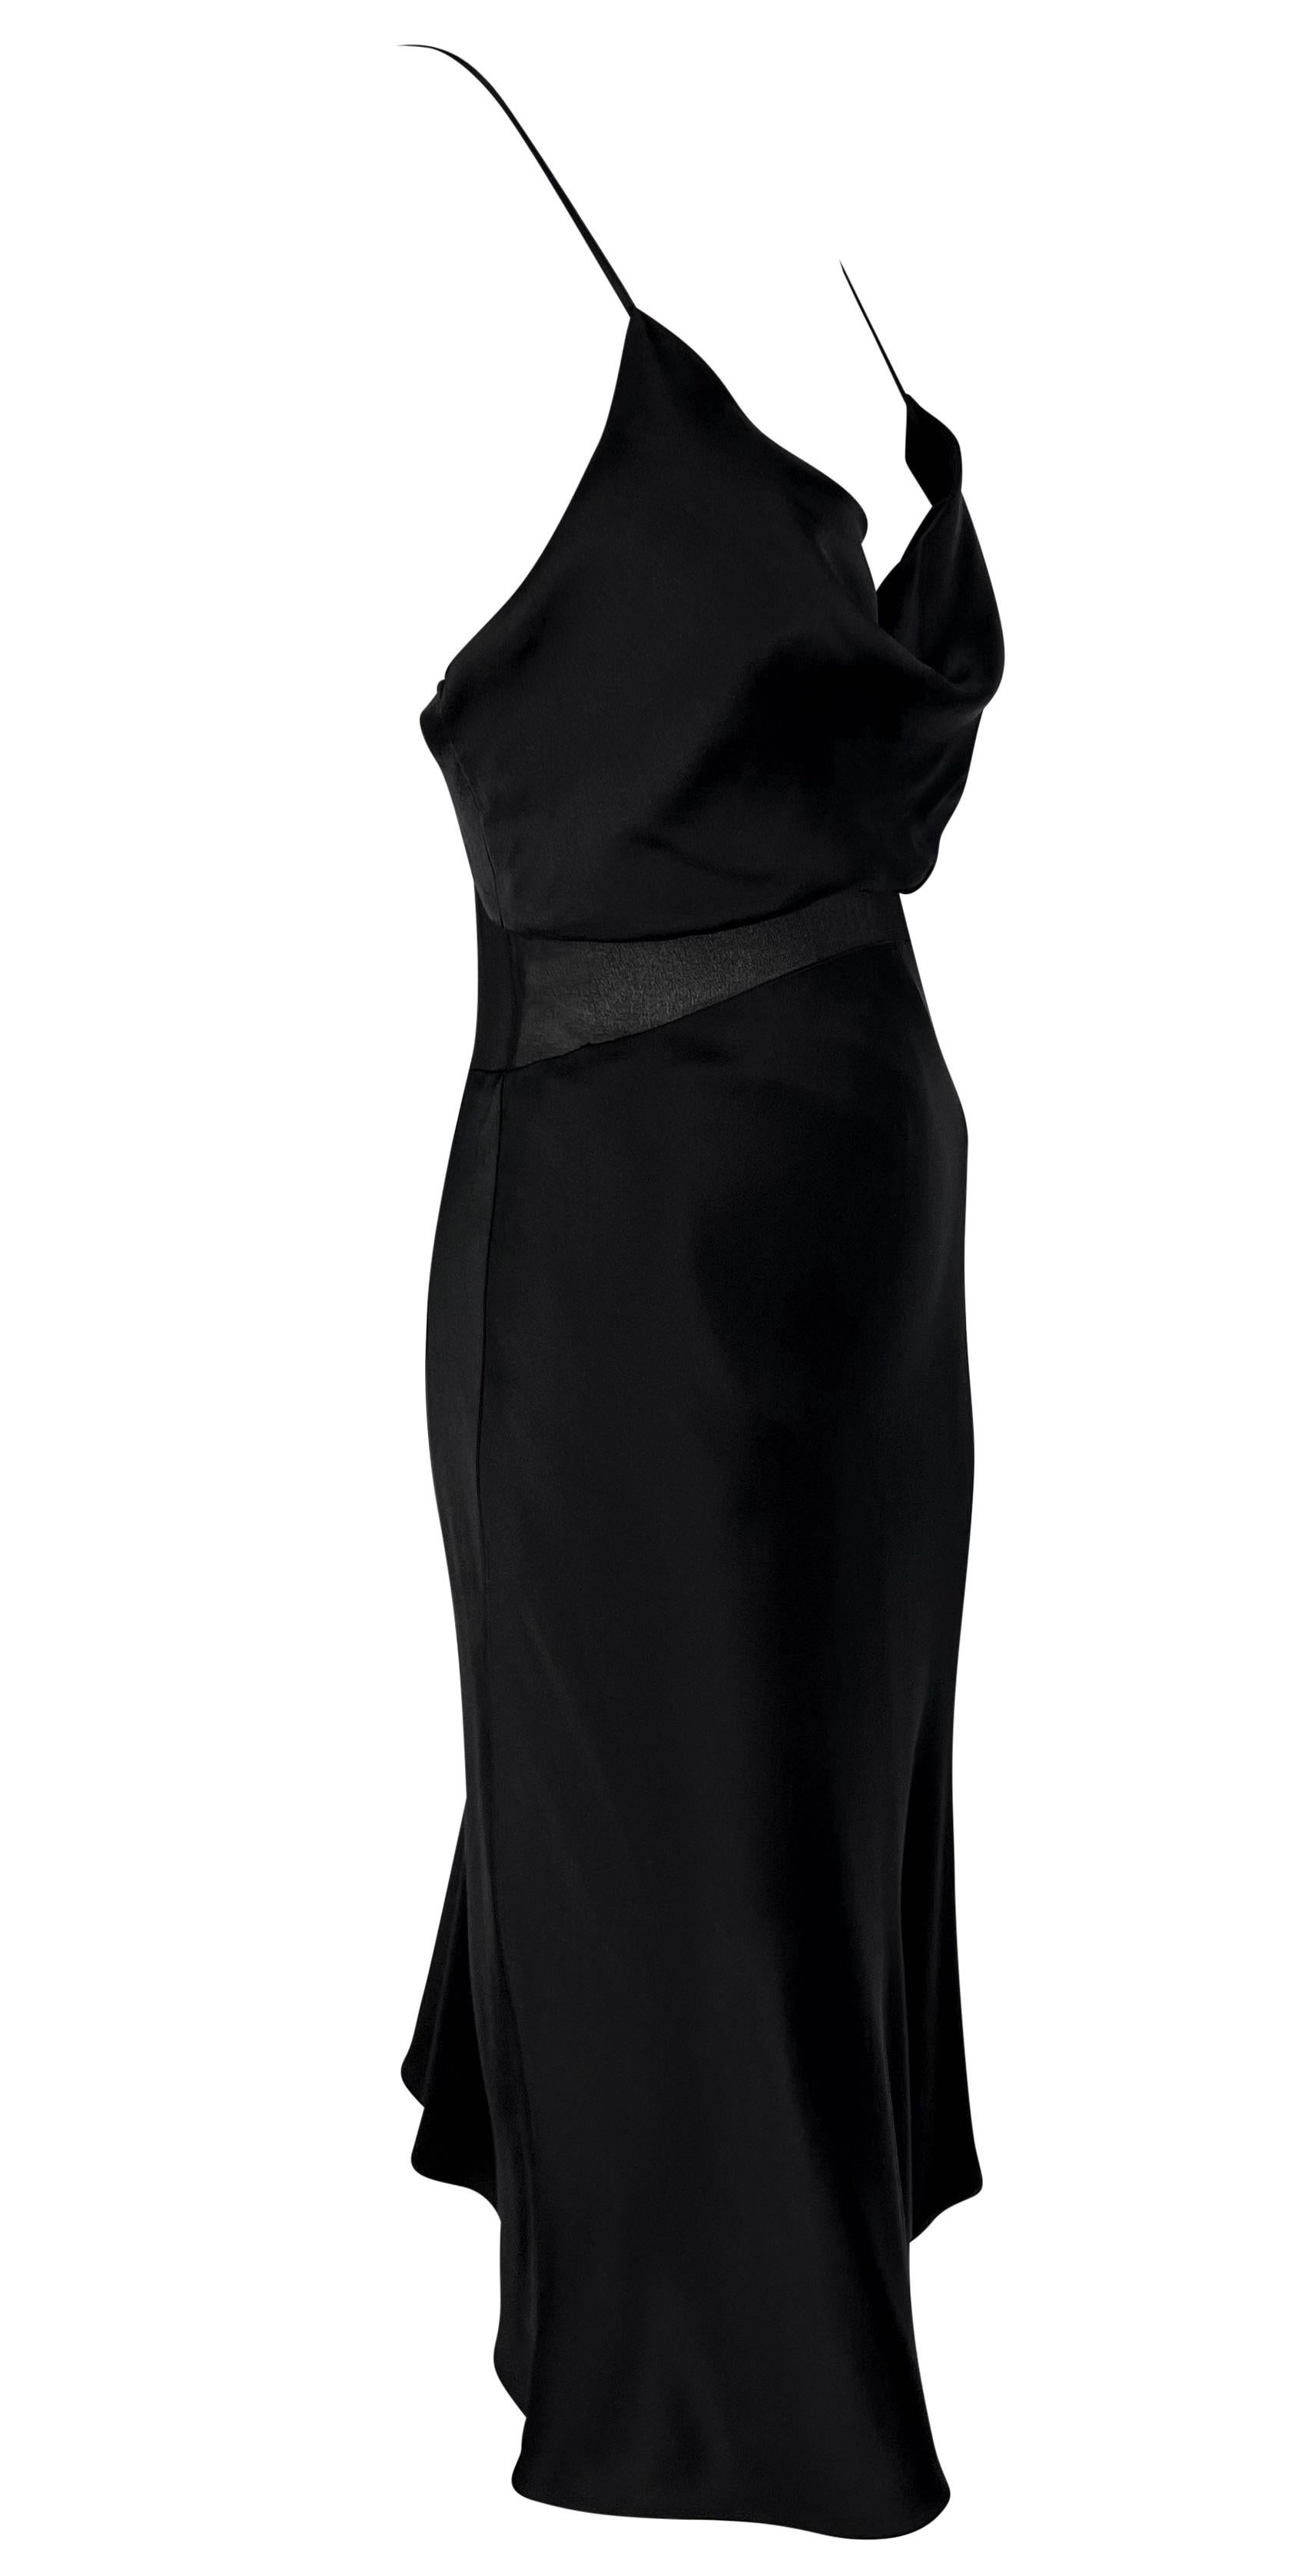 S/S 1997 Gianni Versace Black Satin Cowl Neck Sheer Waist Flare Midi Dress For Sale 3